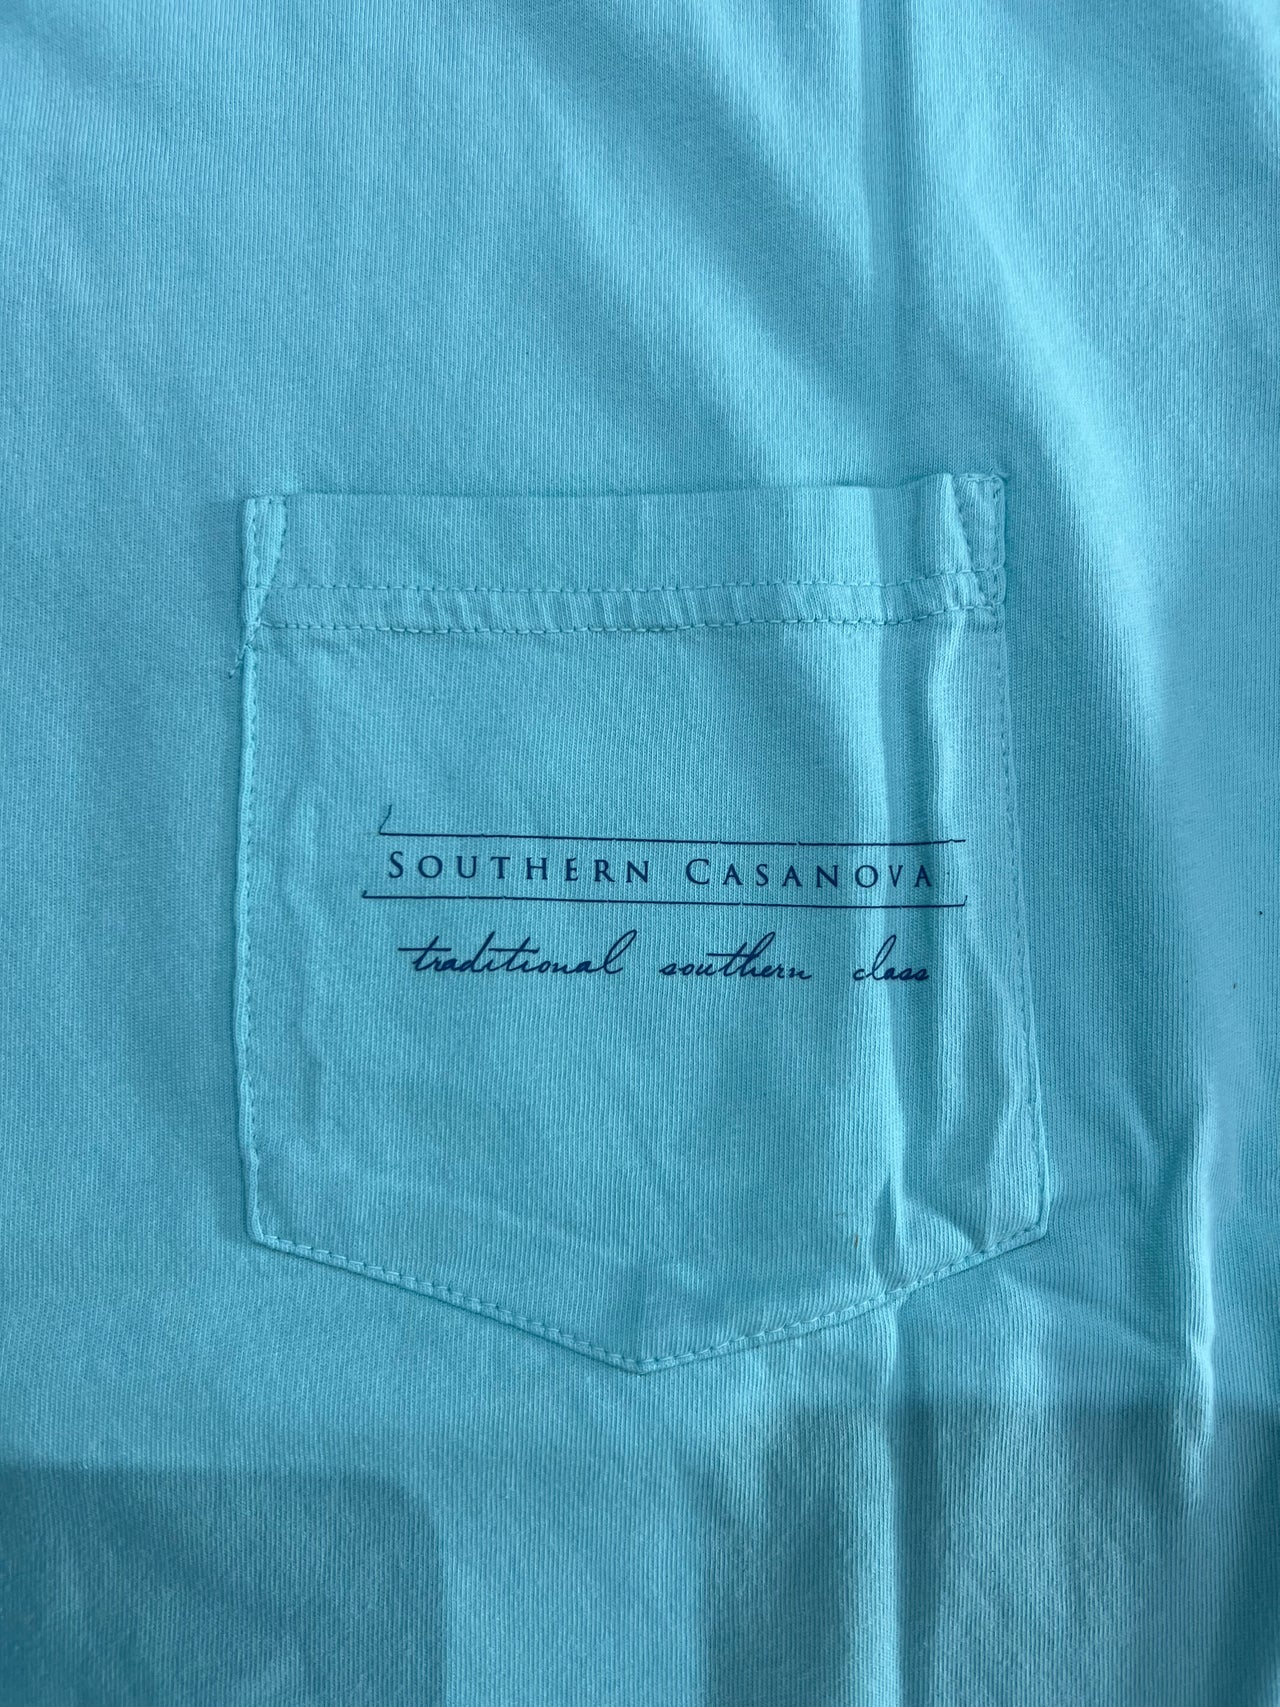 Southern Casanova Bottle Cap Logo Short Sleeve T-shirt - Turquoise Blue